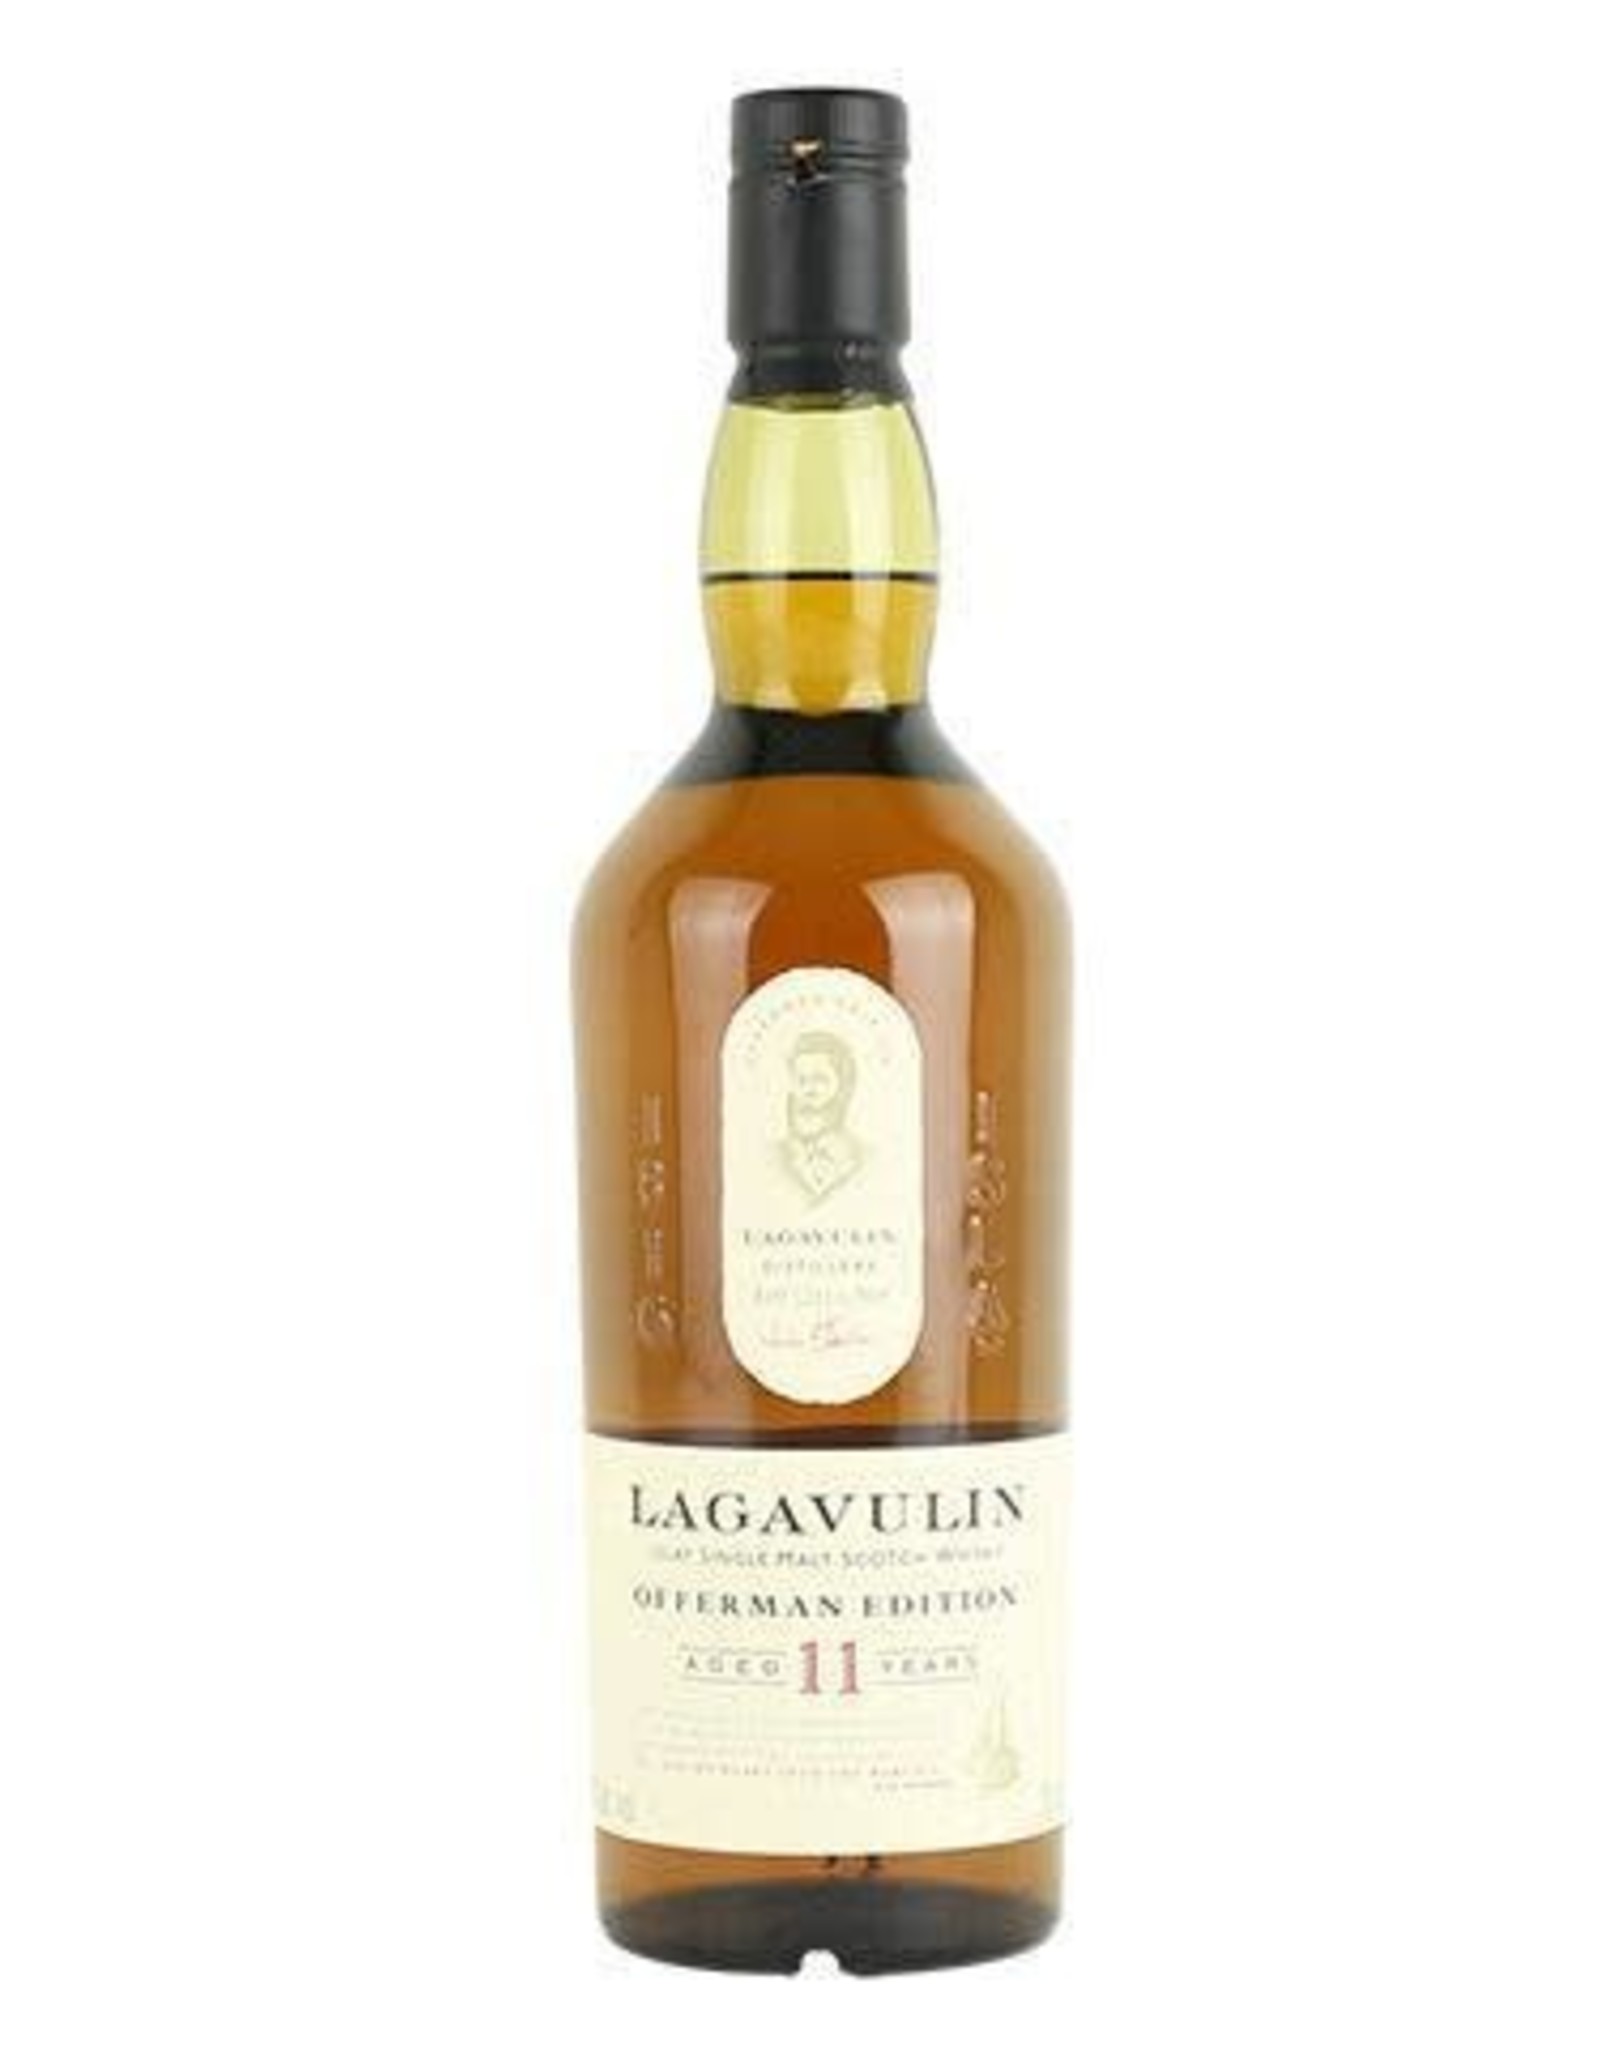 Lagavulin Lagavulin Offerman Edition Aged 11 Years 750 ml